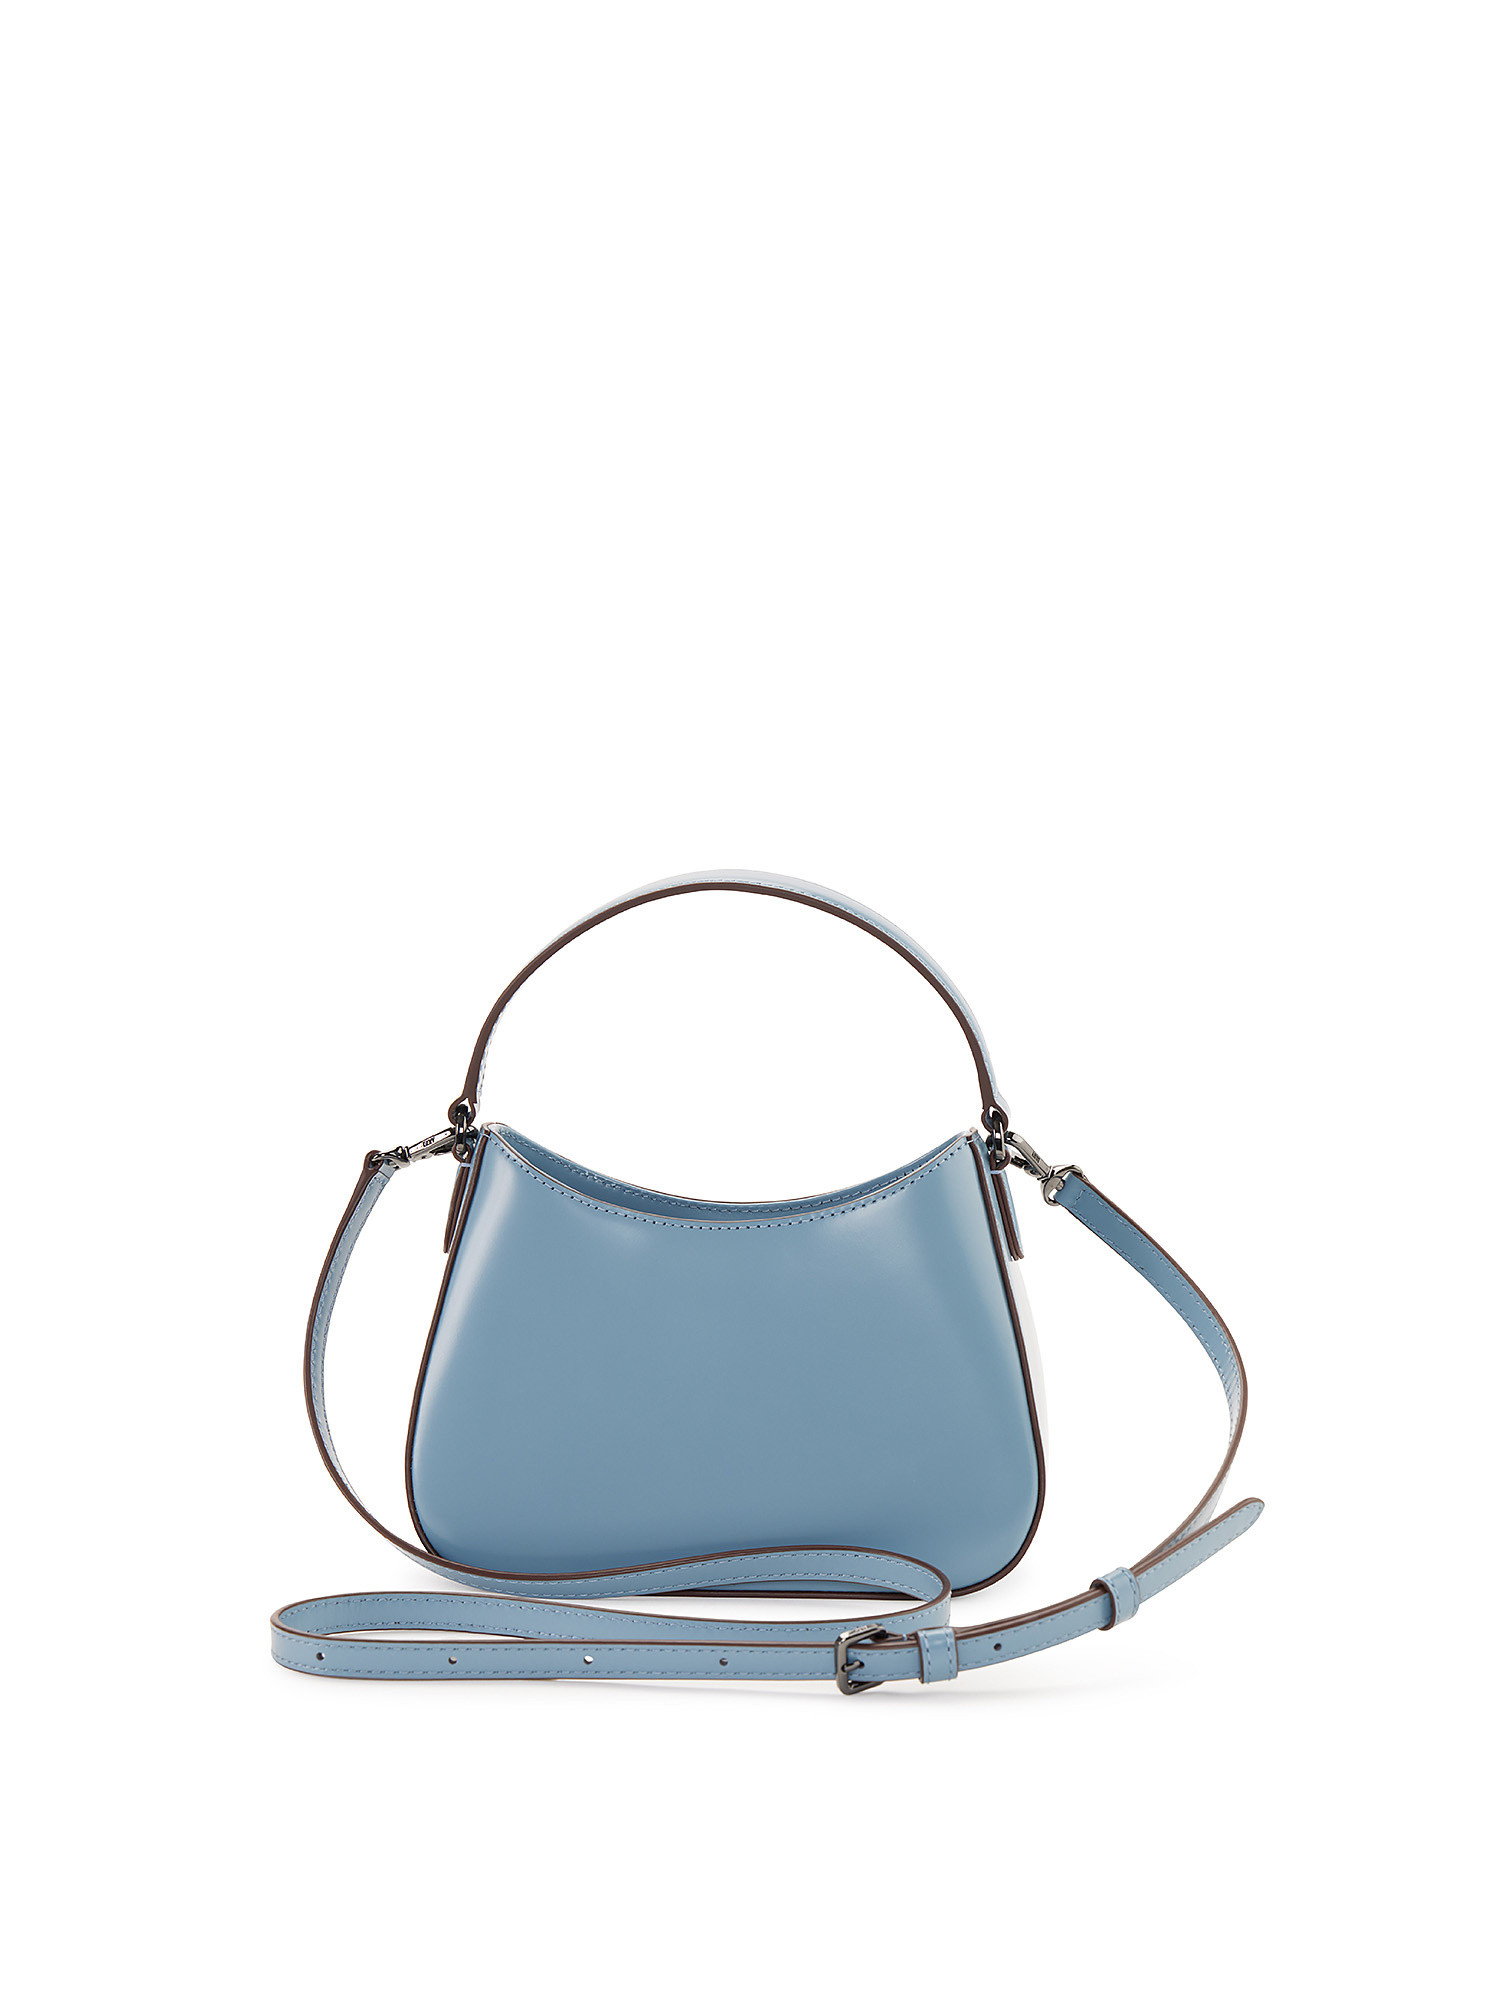 Dkny - Ellie bag with removable tarcolla, Light Blue, large image number 2